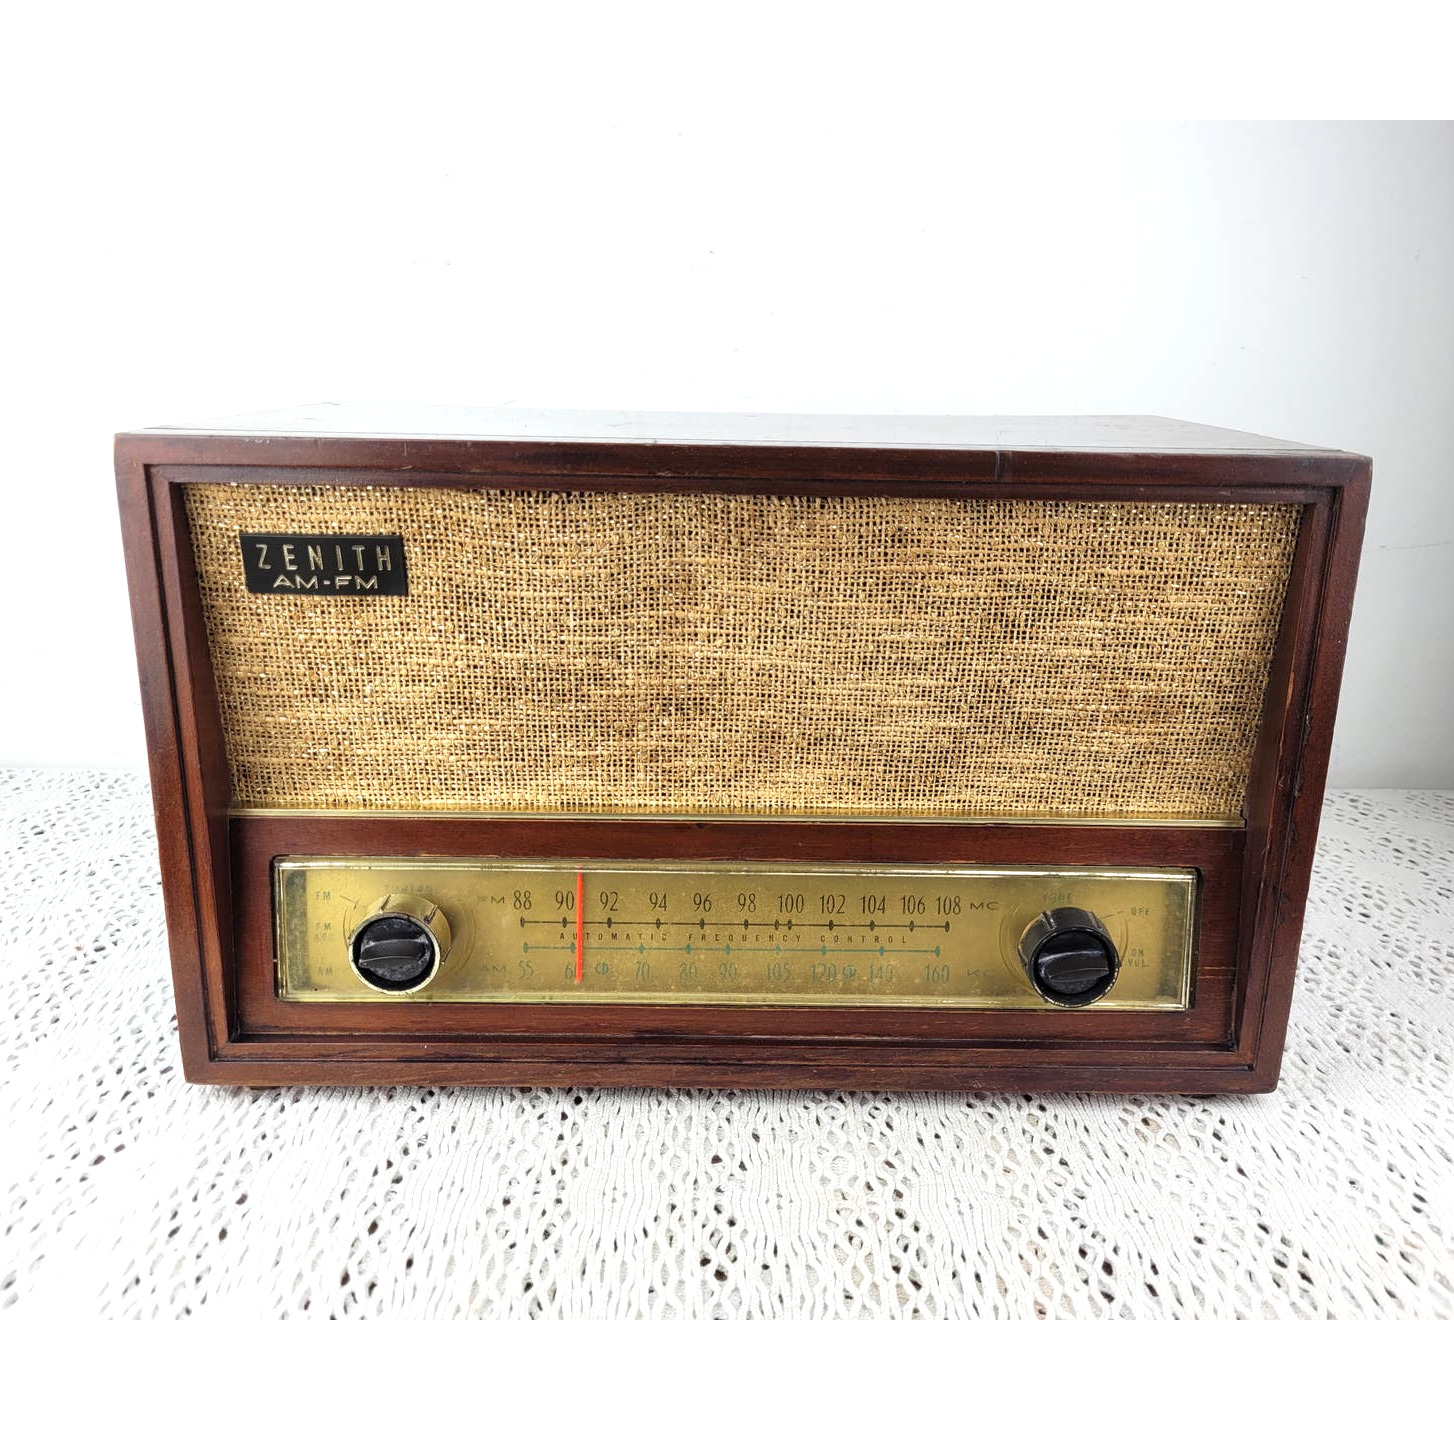 Vintage 1950s Wood Grain Zenith Radio Model S-46210 Tested Working